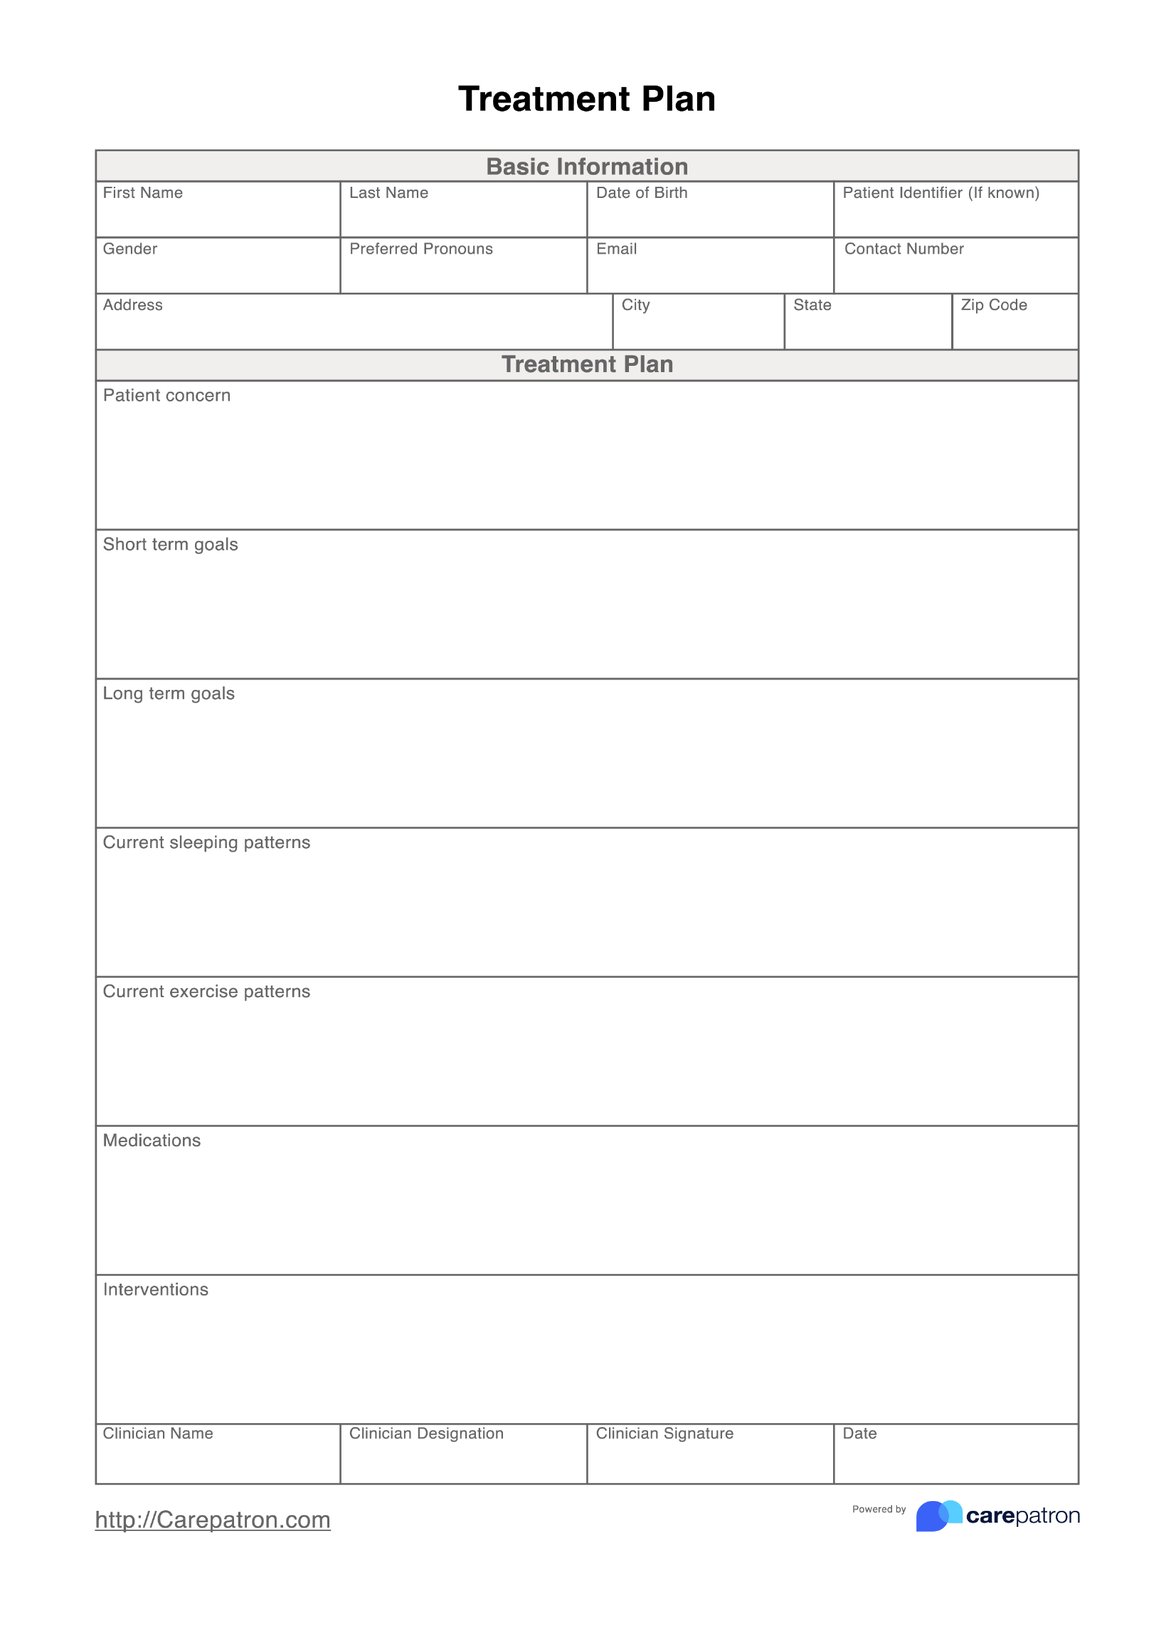 Treatment Plan Template PDF Example